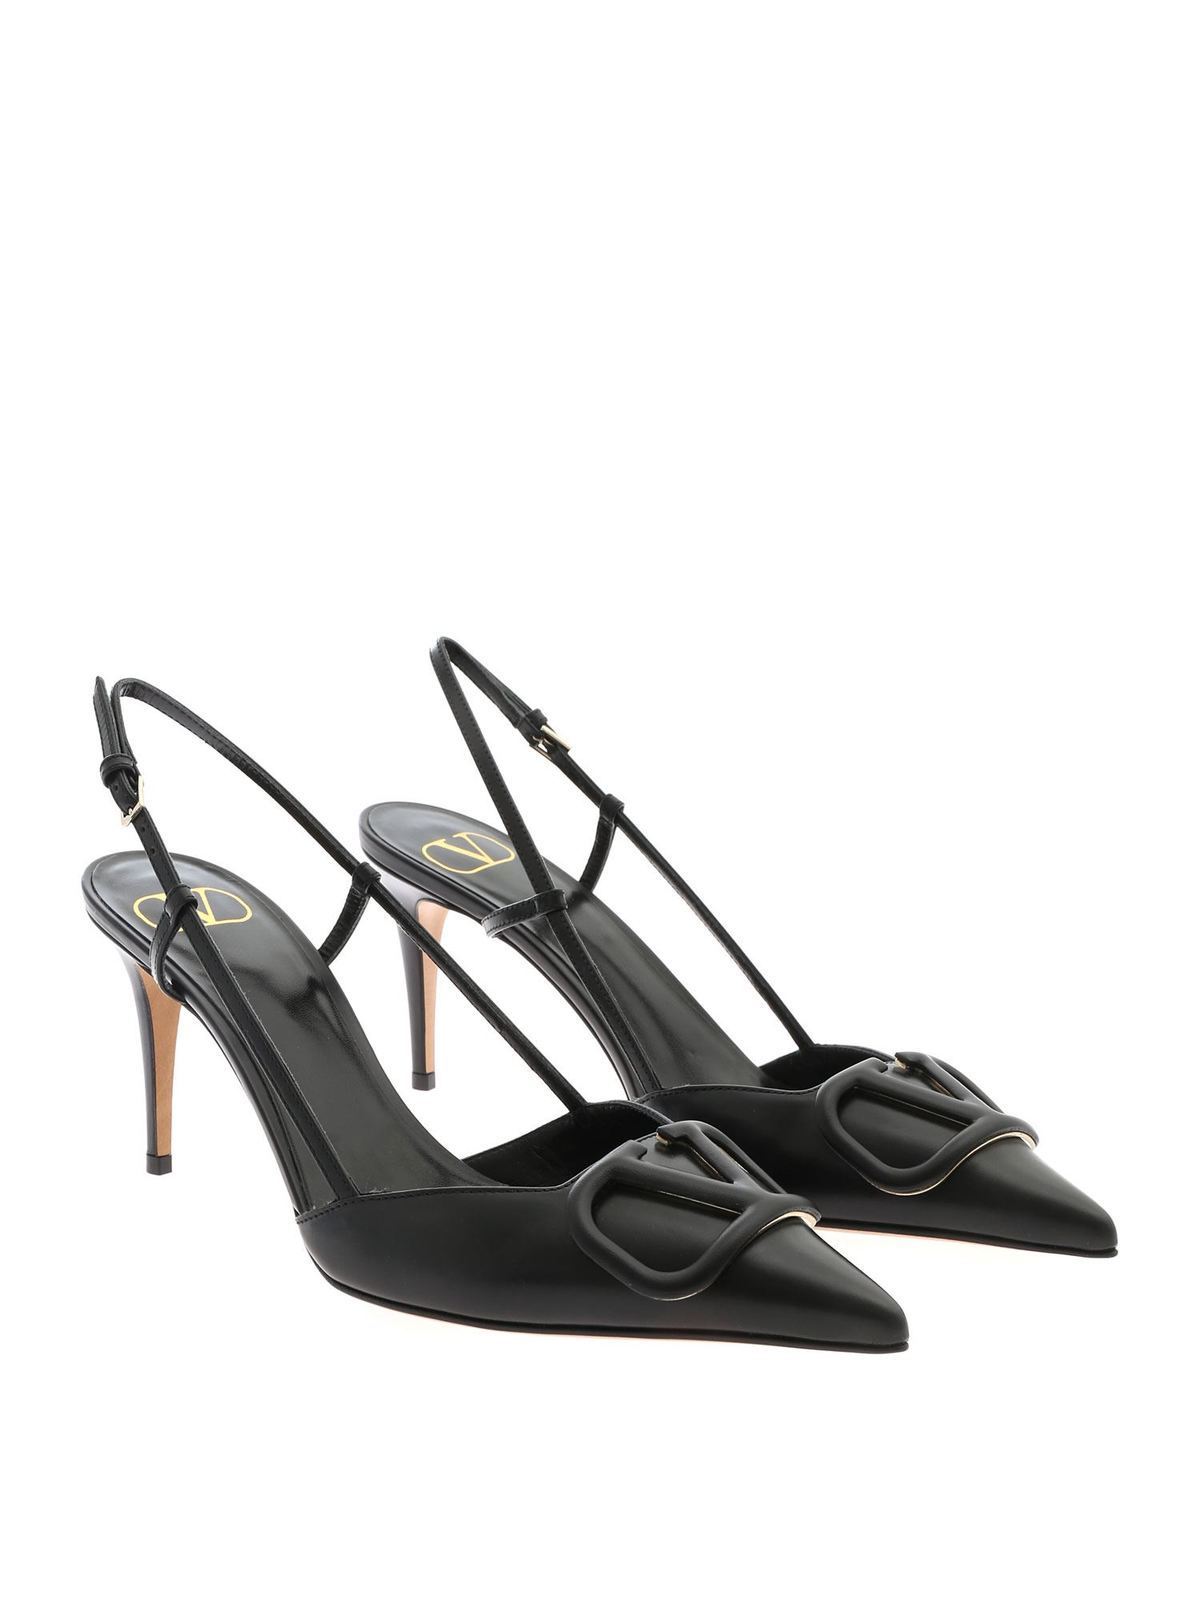 valentino shoes black heels